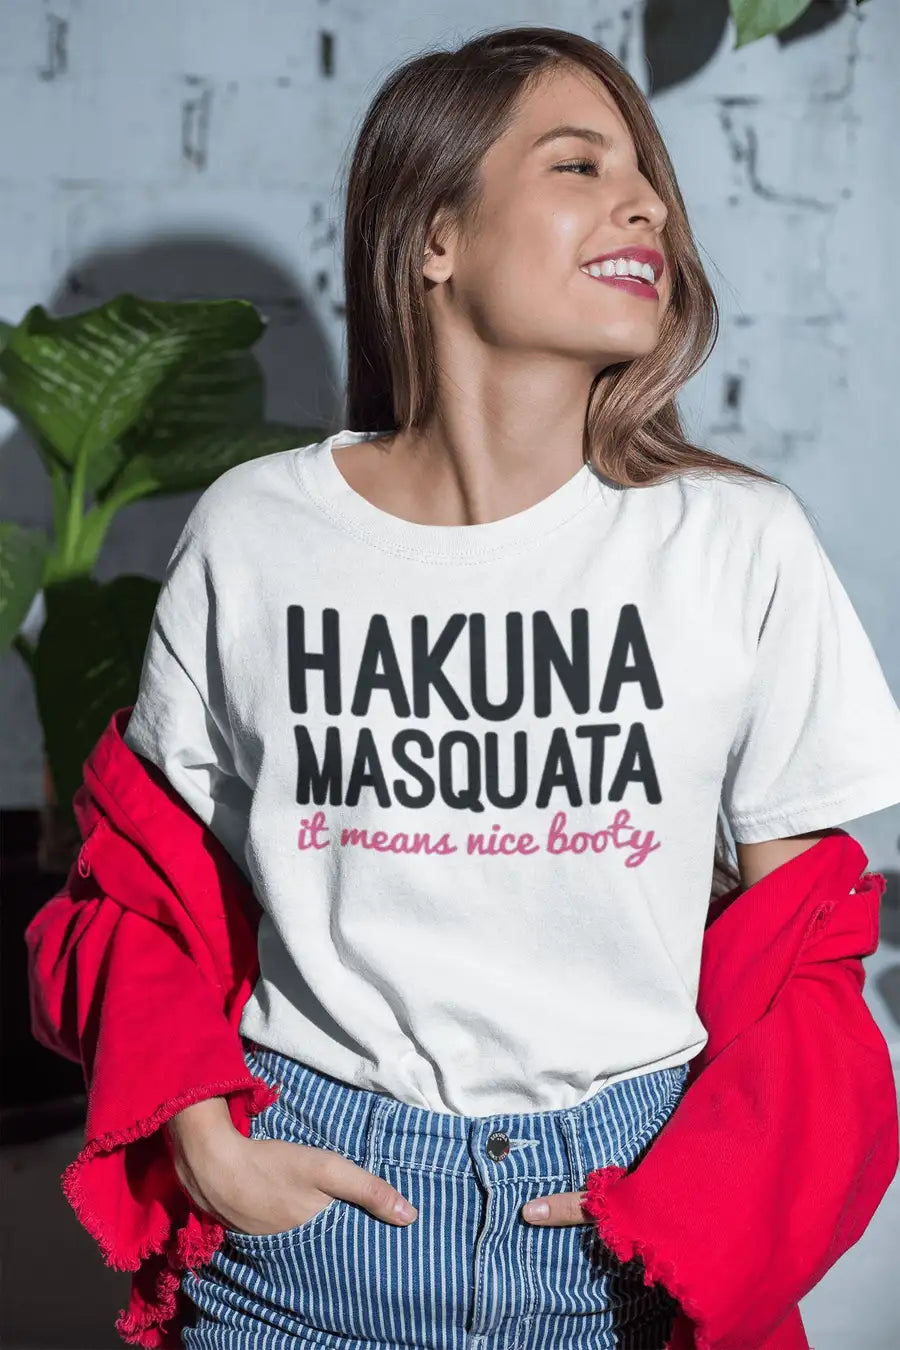 Hakuna Masquata T Shirt for Men and Women | Premium Design | Catch My Drift India - Catch My Drift India Clothing clothing, general, gym, made in india, shirt, t shirt, trending, tshirt